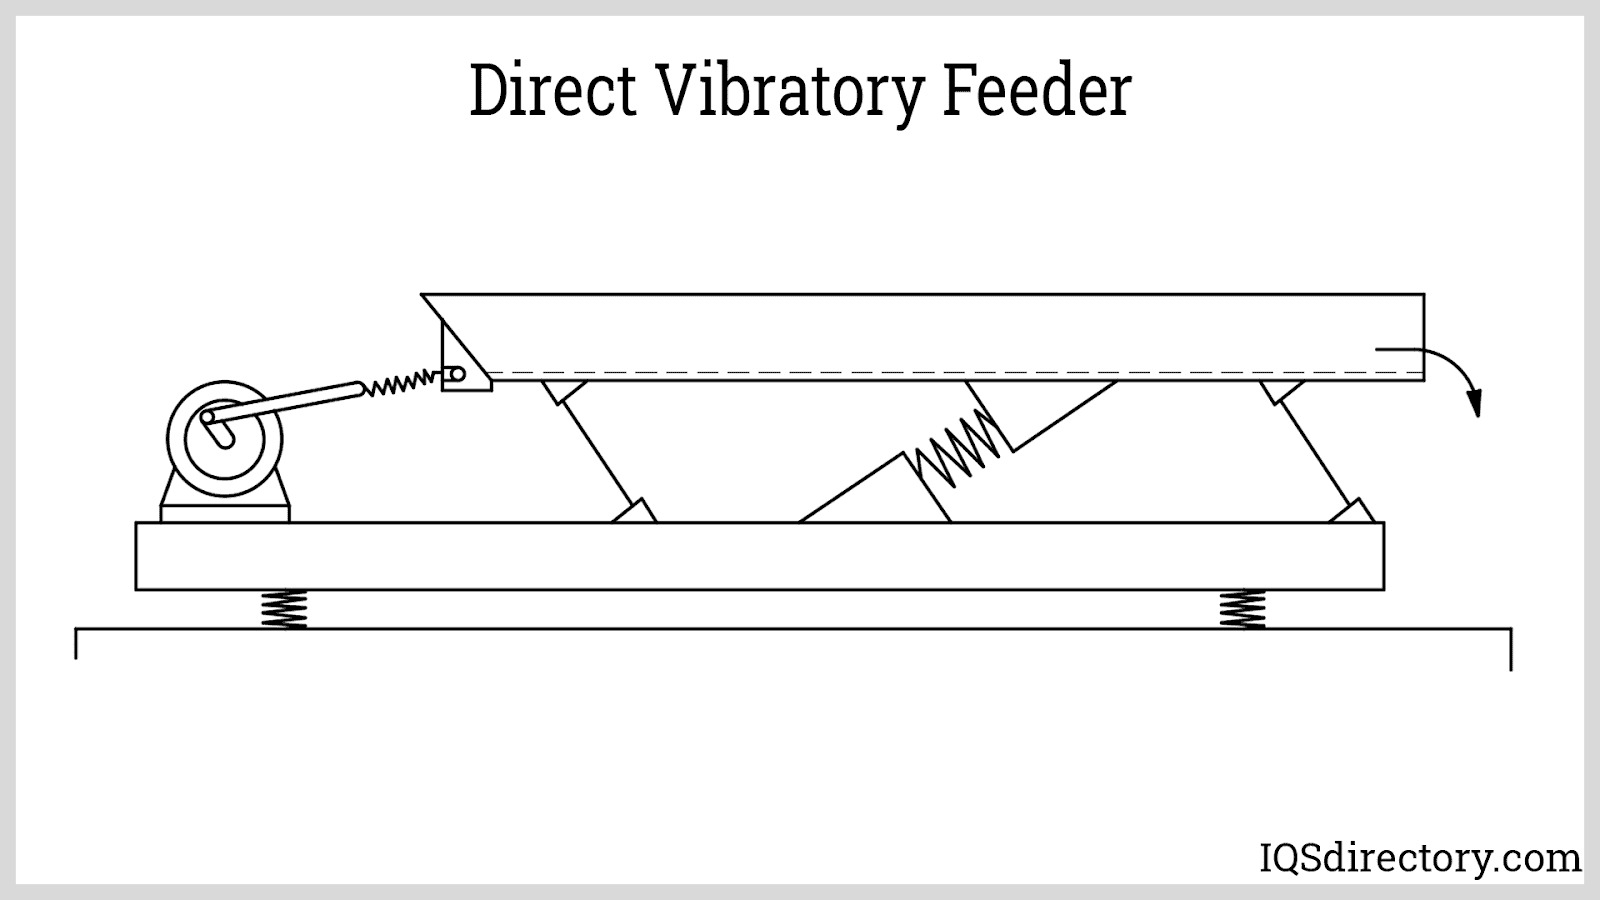 Direct Vibratory Feeder